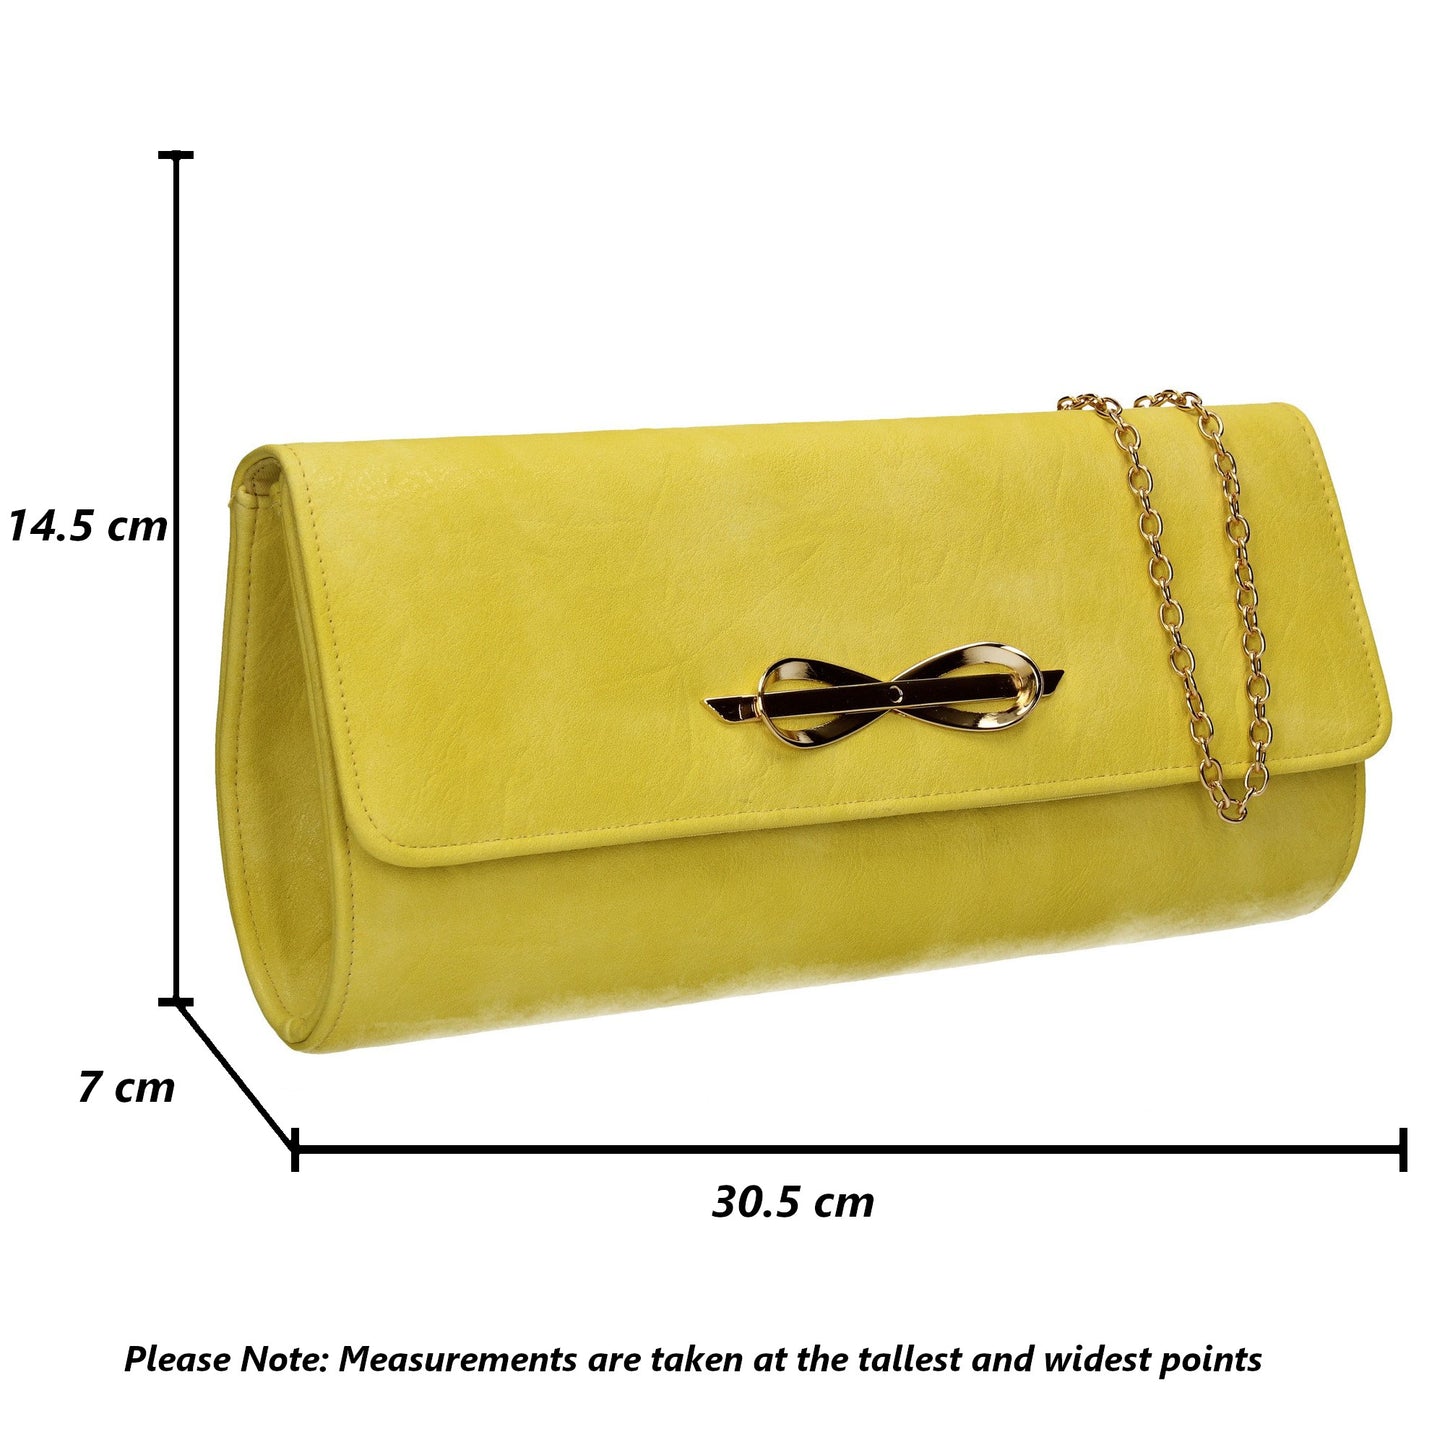 SWANKYSWANS Abigail Clutch Bag Yellow Cute Cheap Clutch Bag For Weddings School and Work